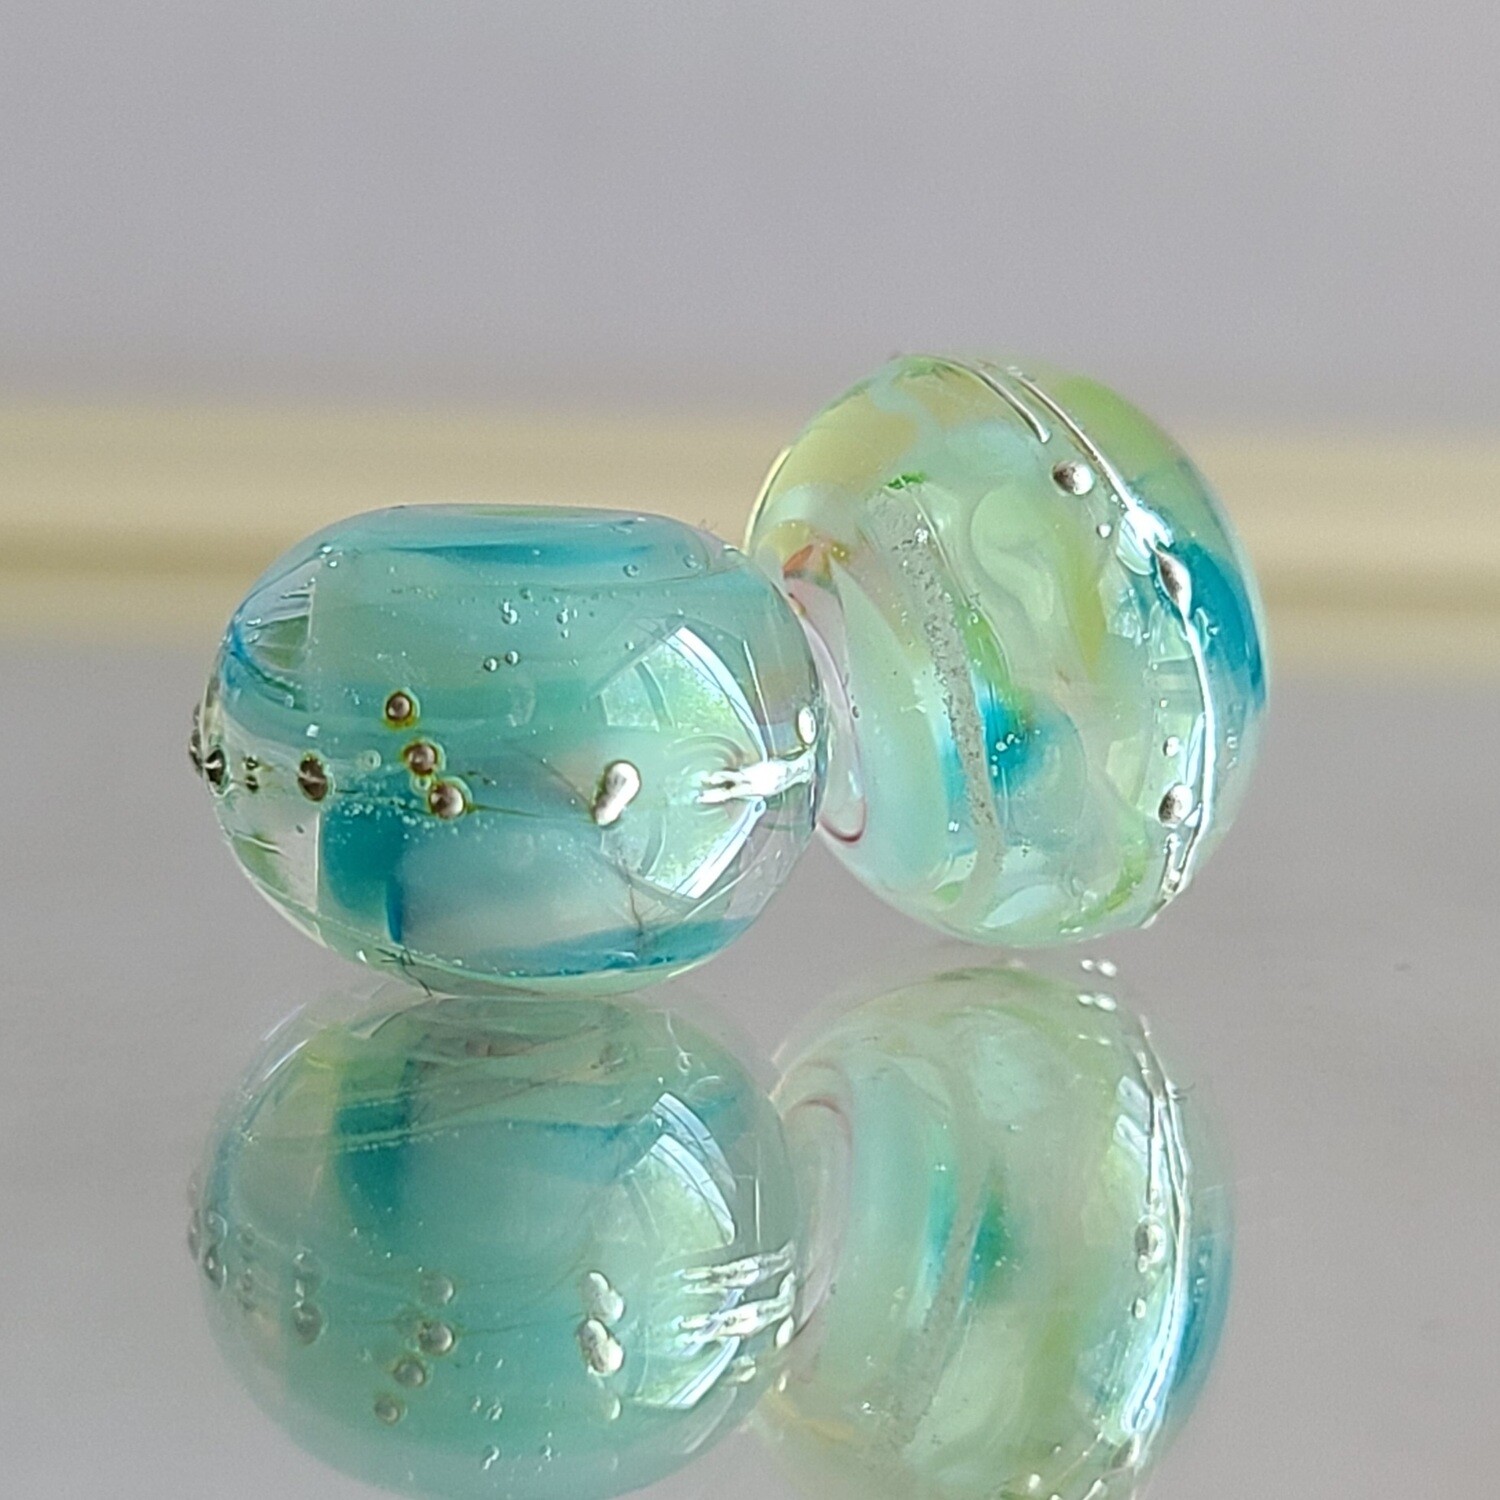 Enchanted Pair Handmade Lampwork Beads